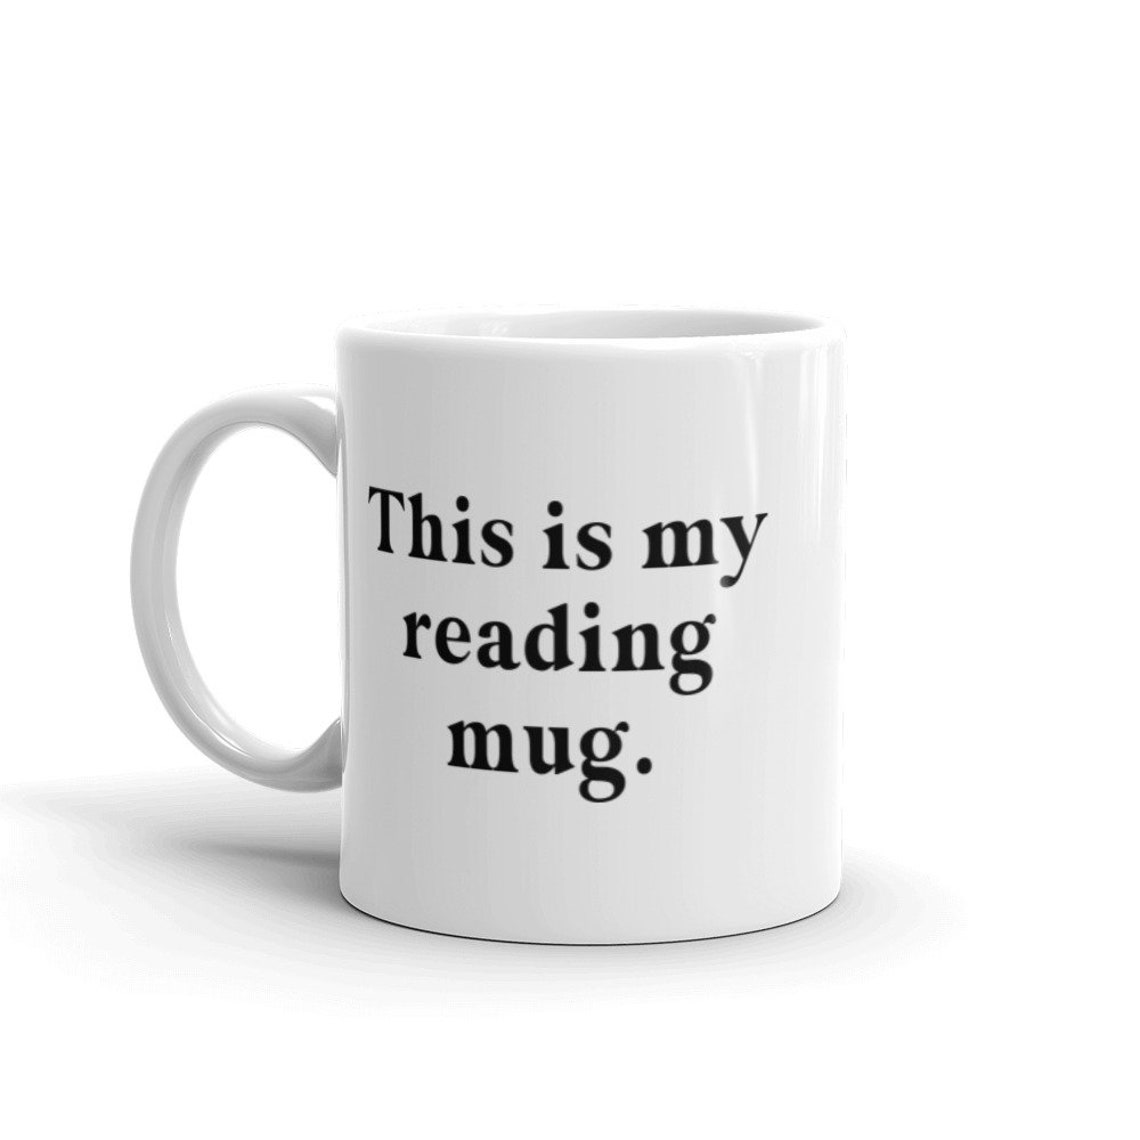 This is my reading mug. white mug with black text | Etsy